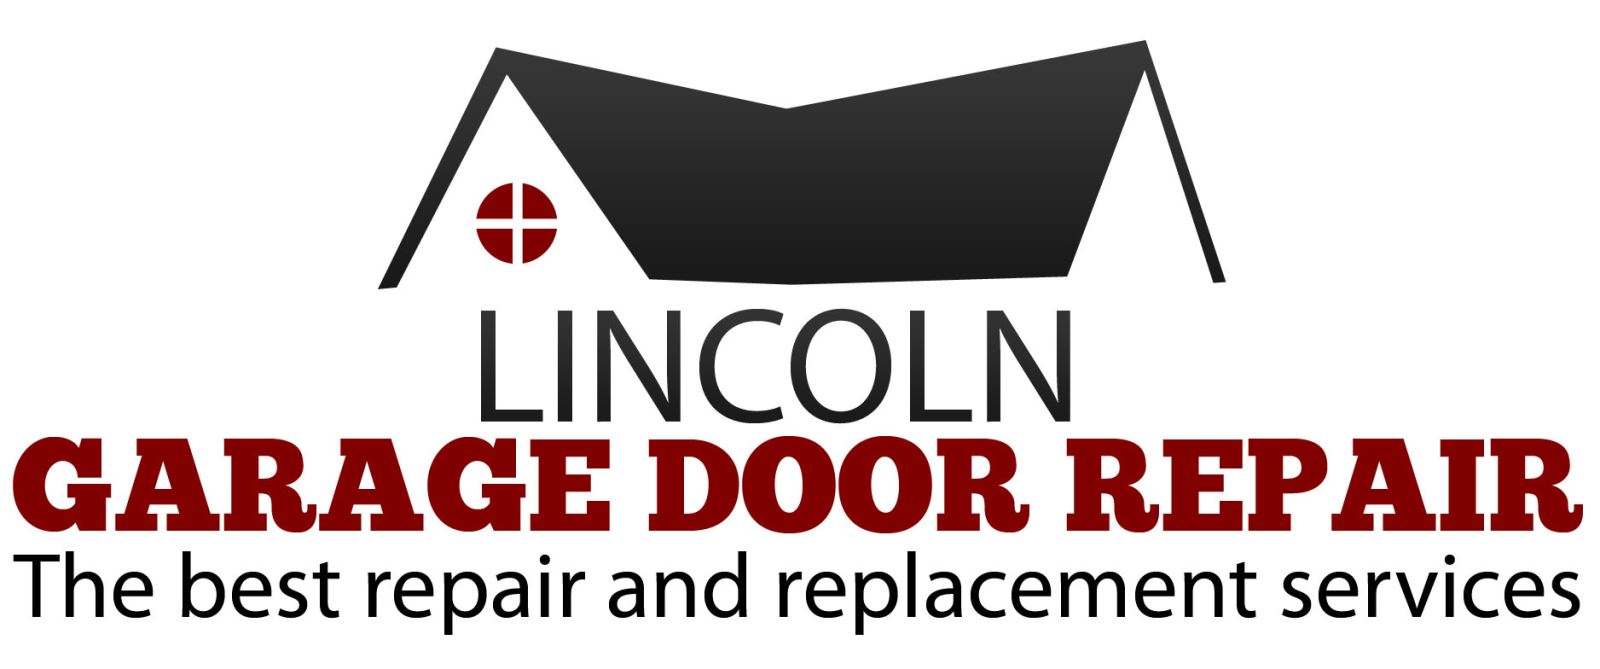 Garage Door Repair Lincoln,CA